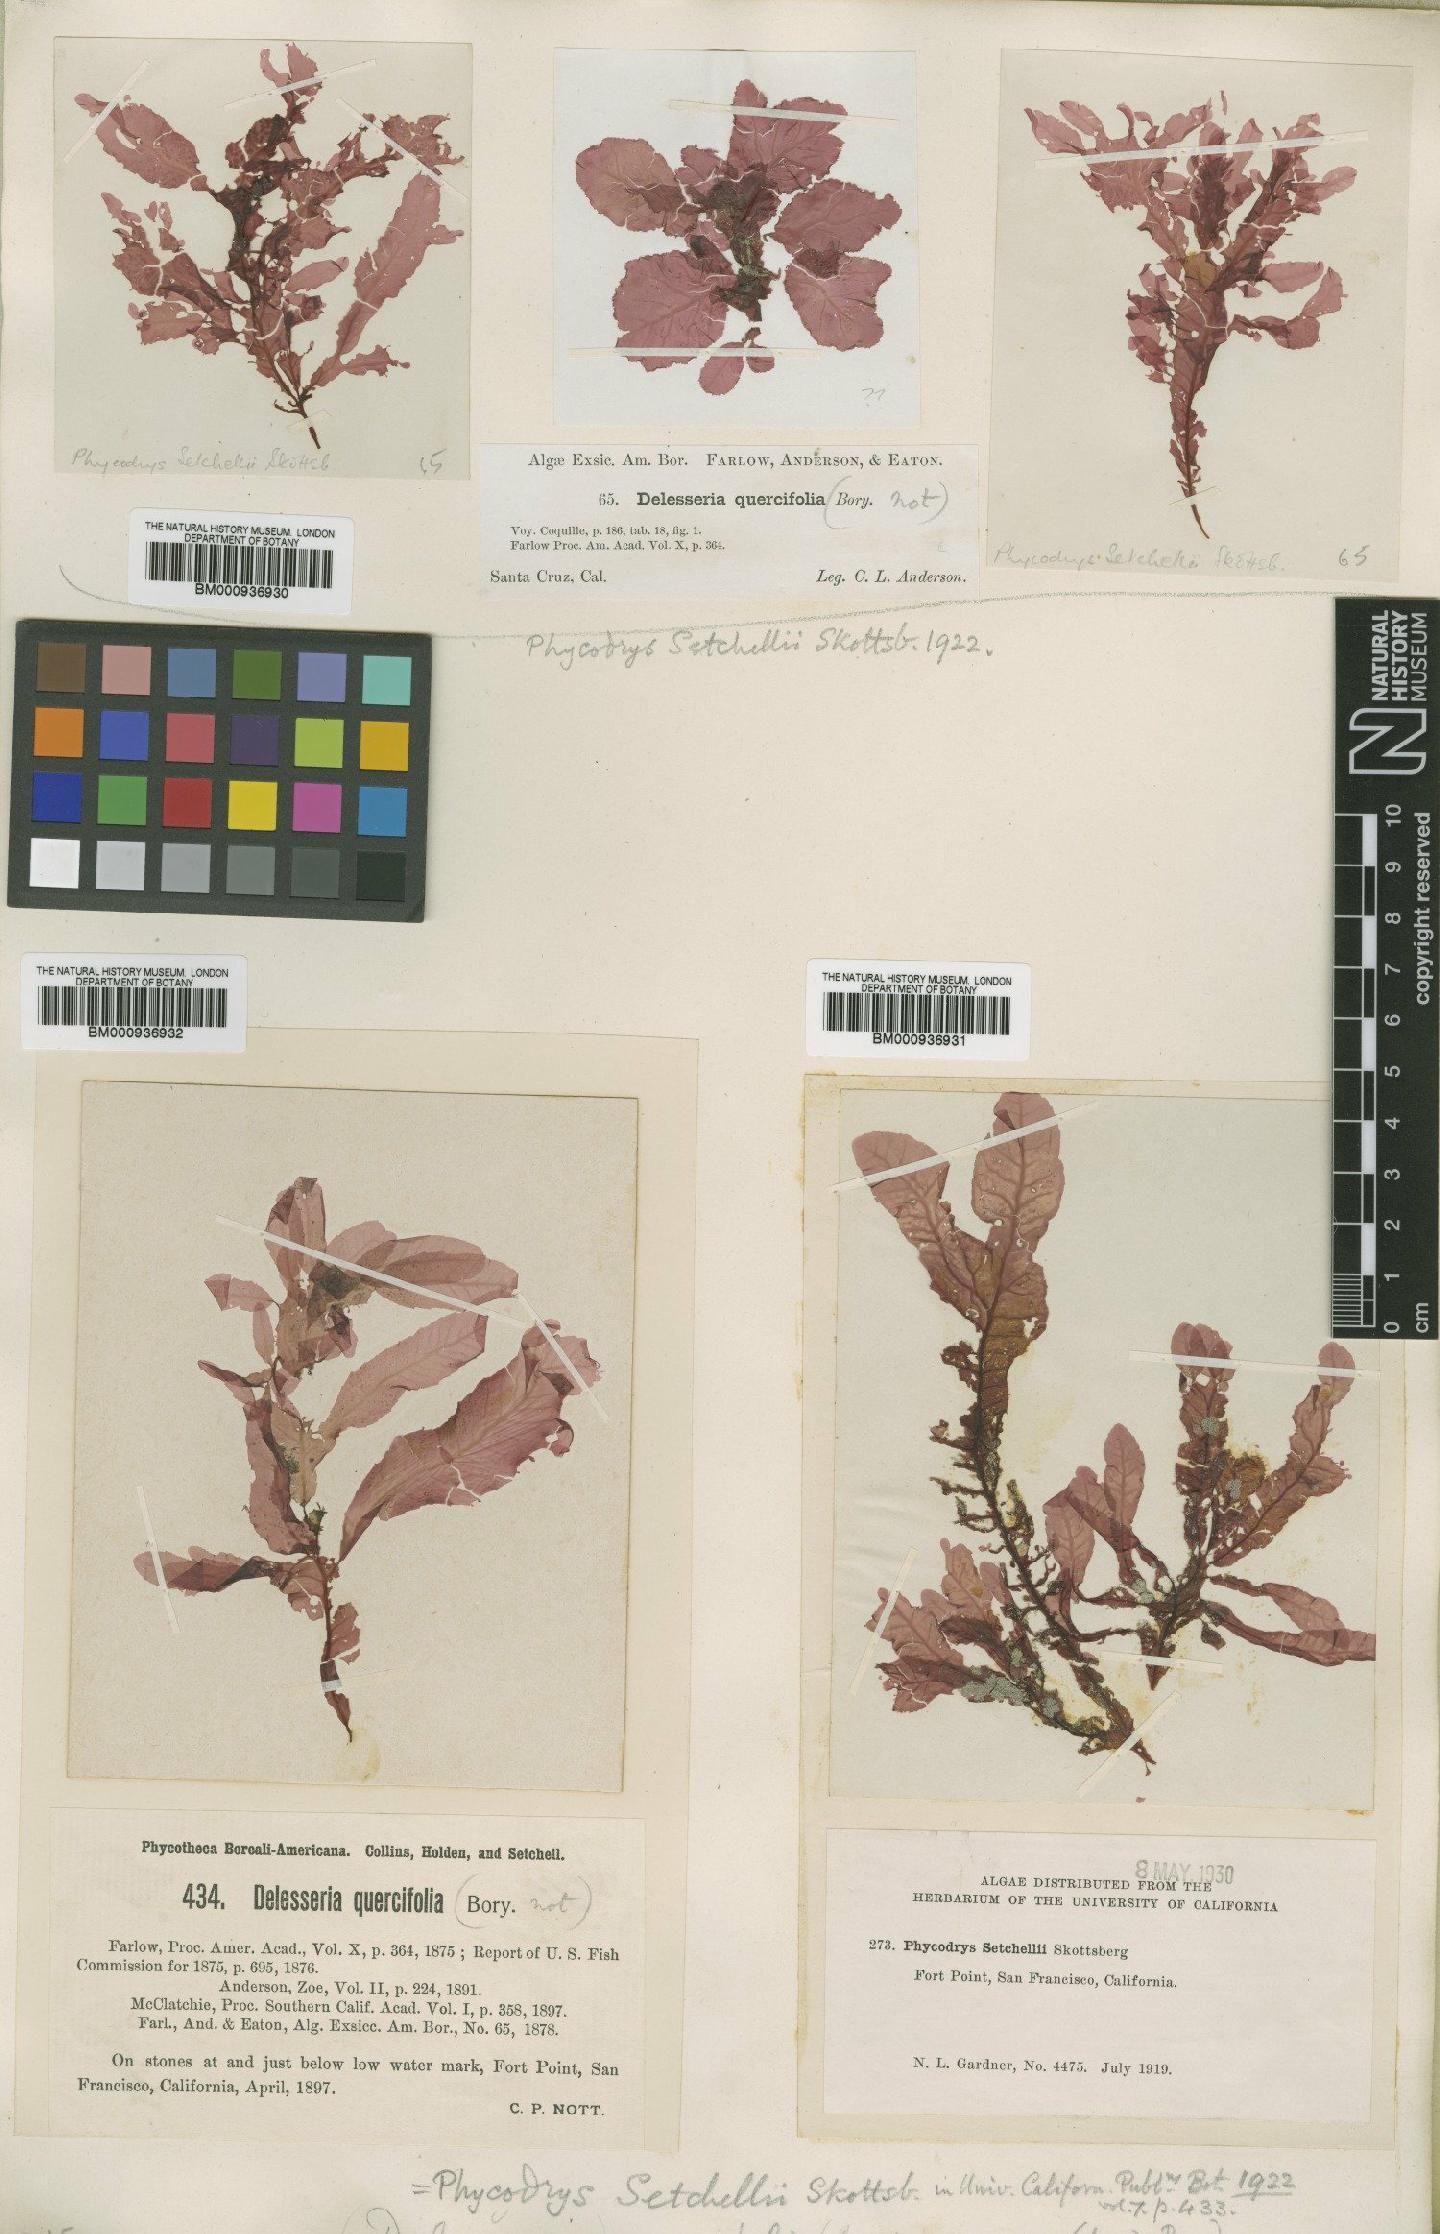 To NHMUK collection (Phycodrys setchellii Skottsb.; Syntype; NHMUK:ecatalogue:464773)